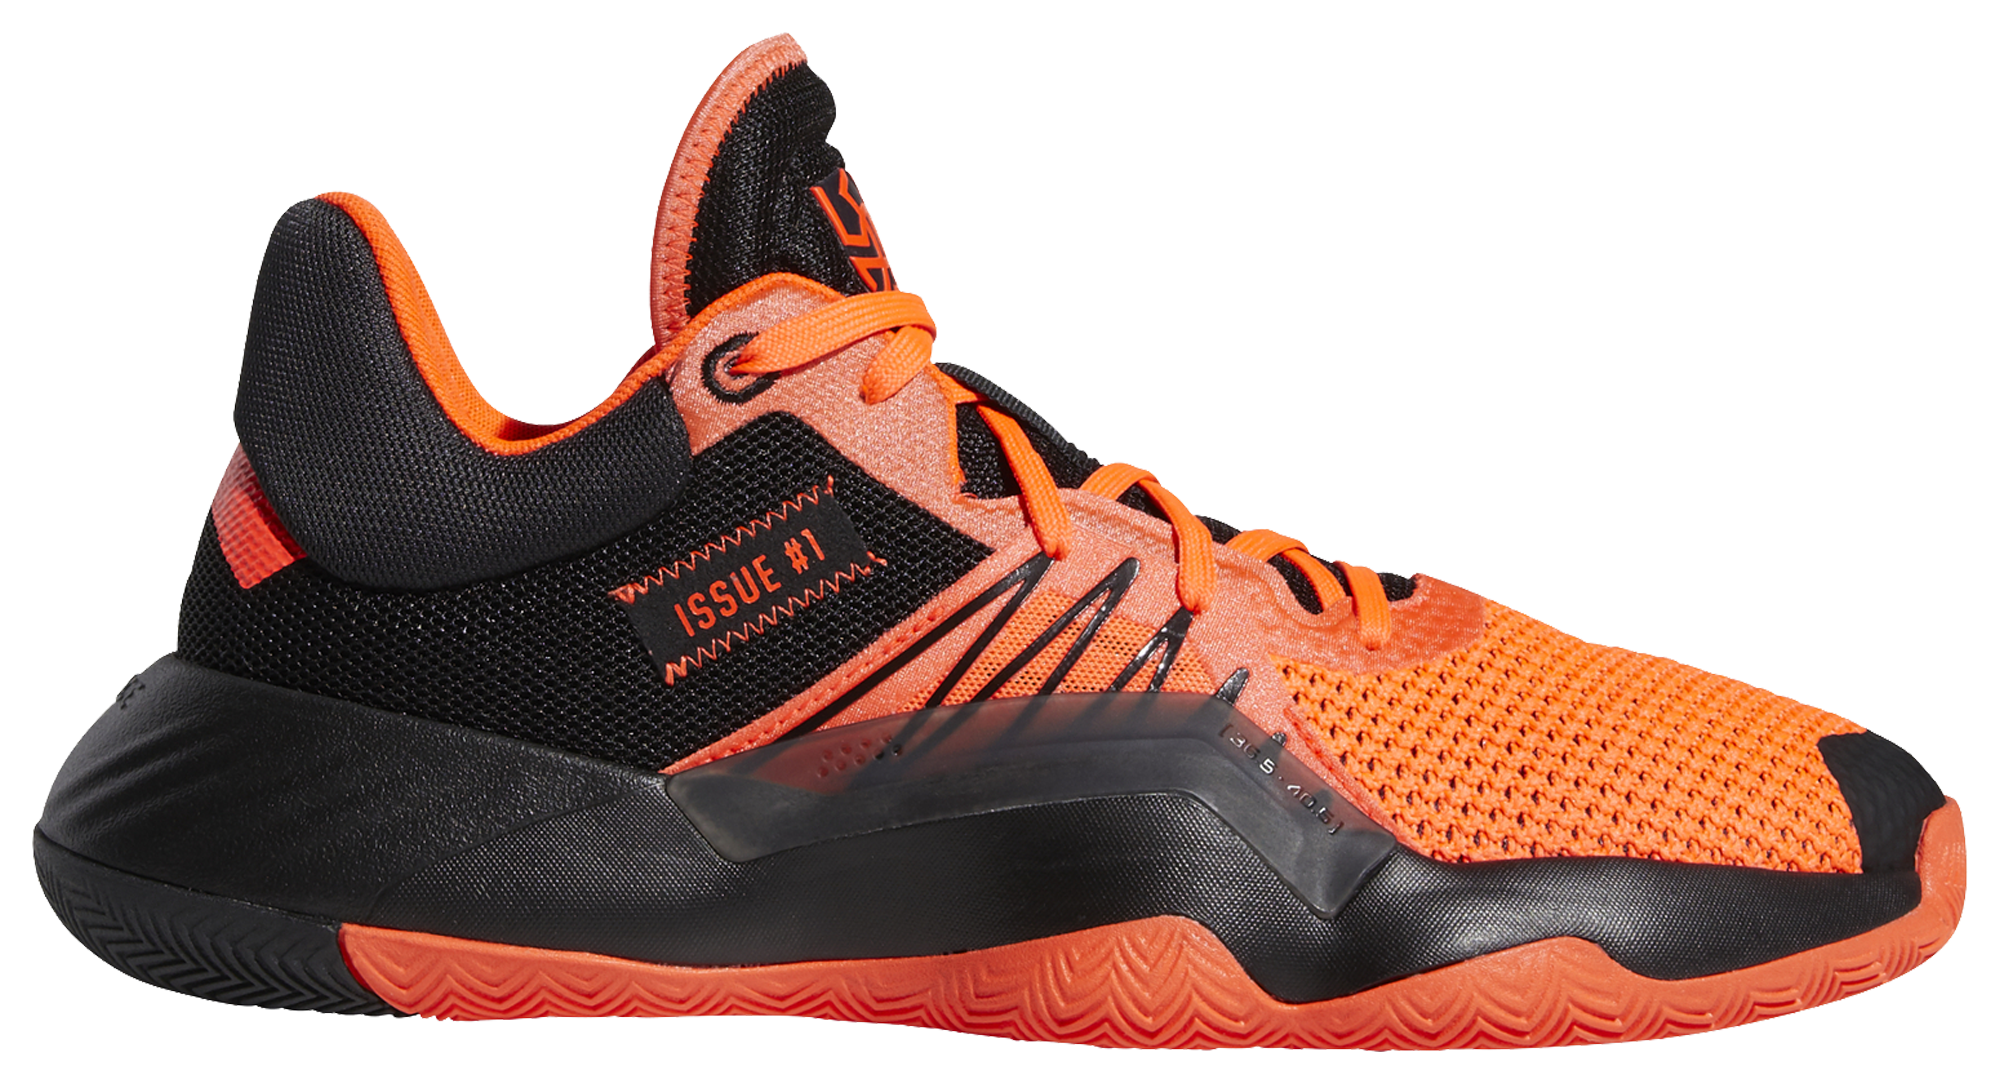 maroon adidas basketball shoes